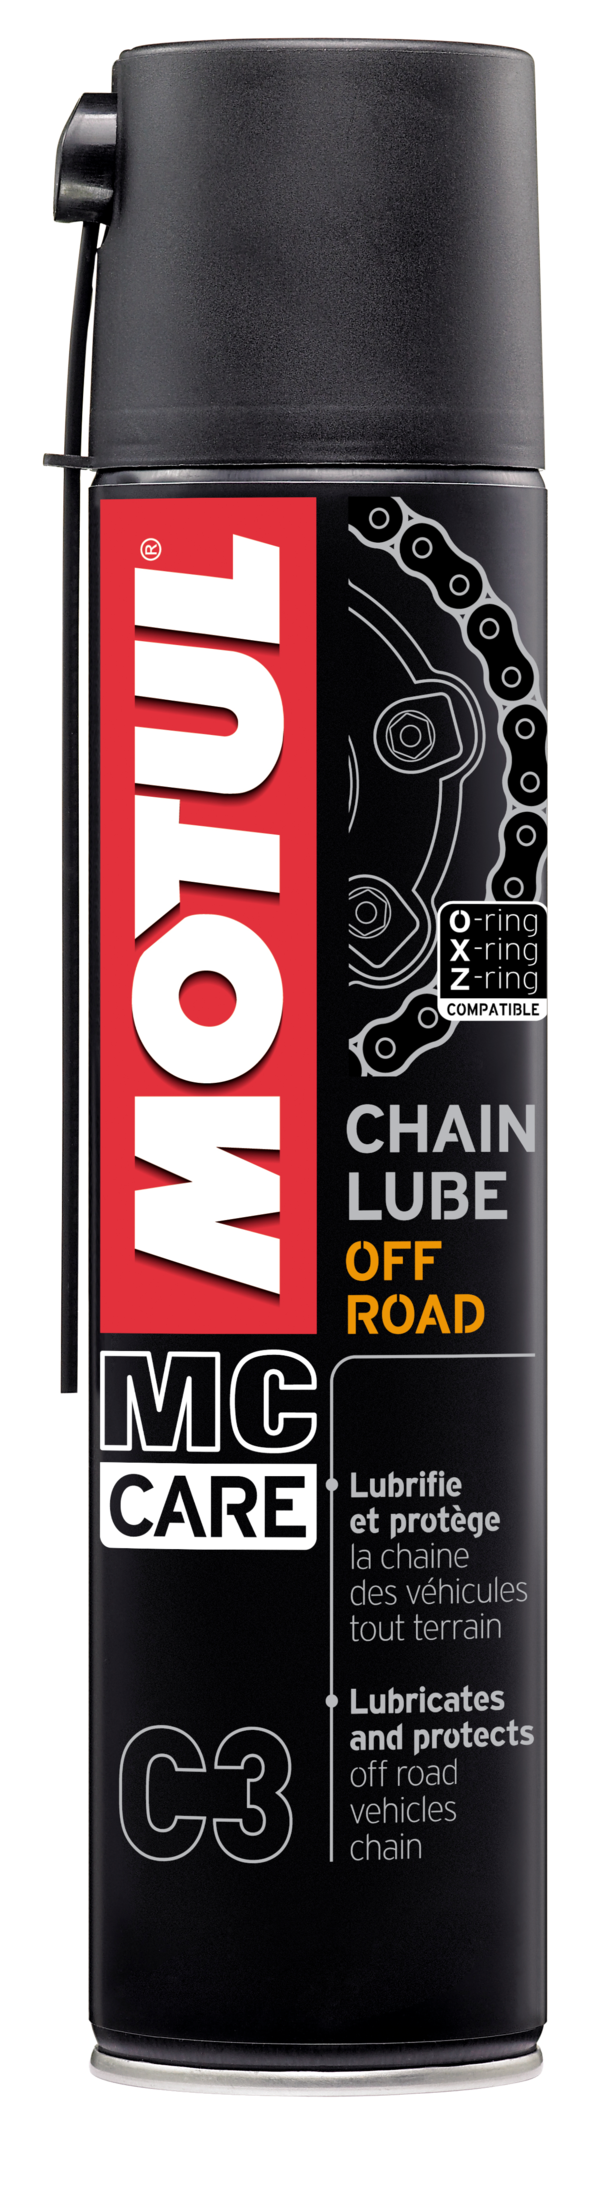 Off road chain lubricant MC CARE C3 - 0,4L - Picture 1 of 1